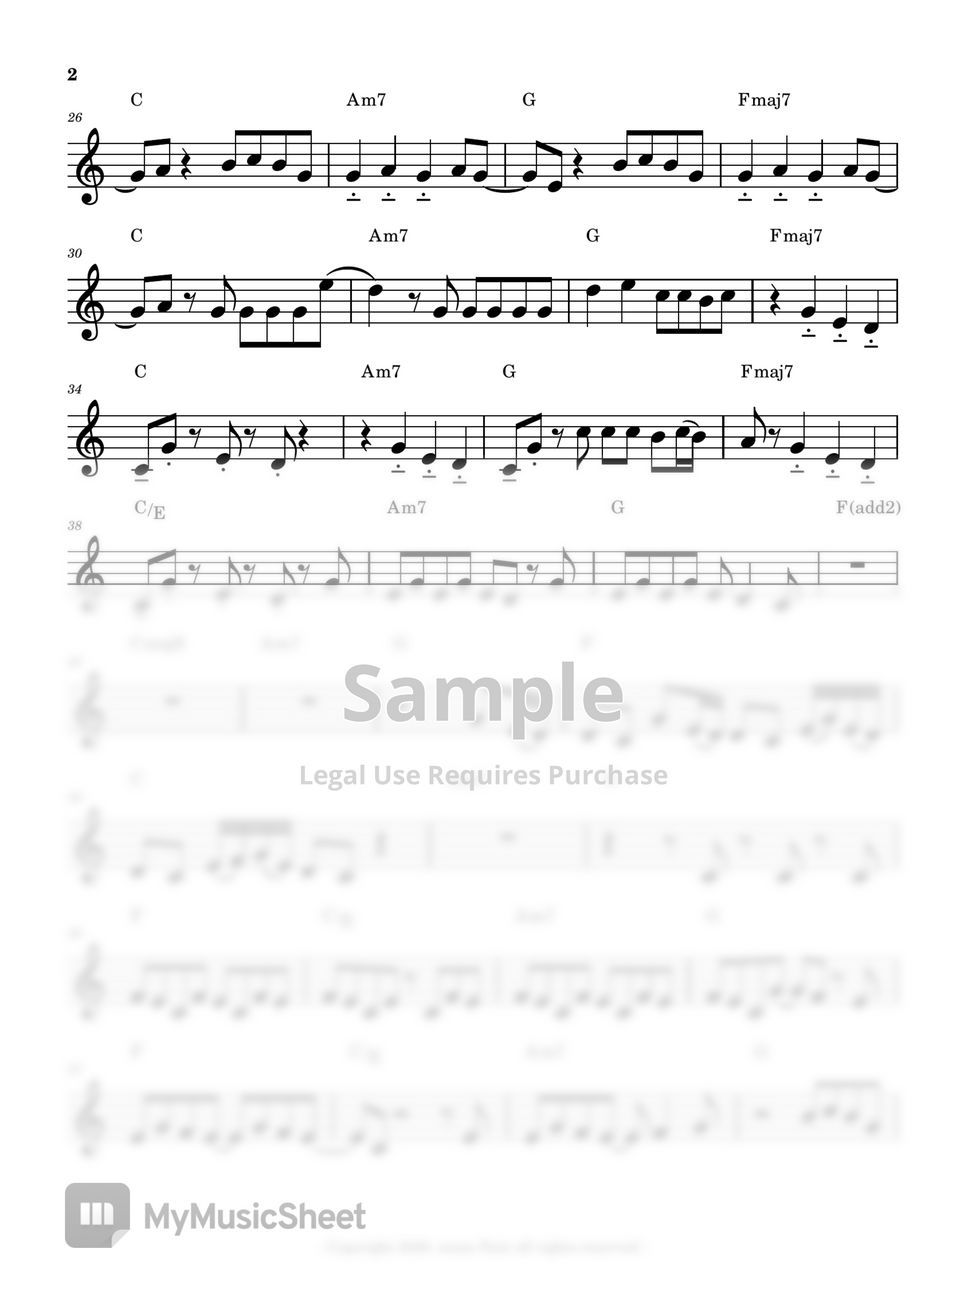 IU 아이유 - Eight (Flute Sheet Music Easy) by sonye flute